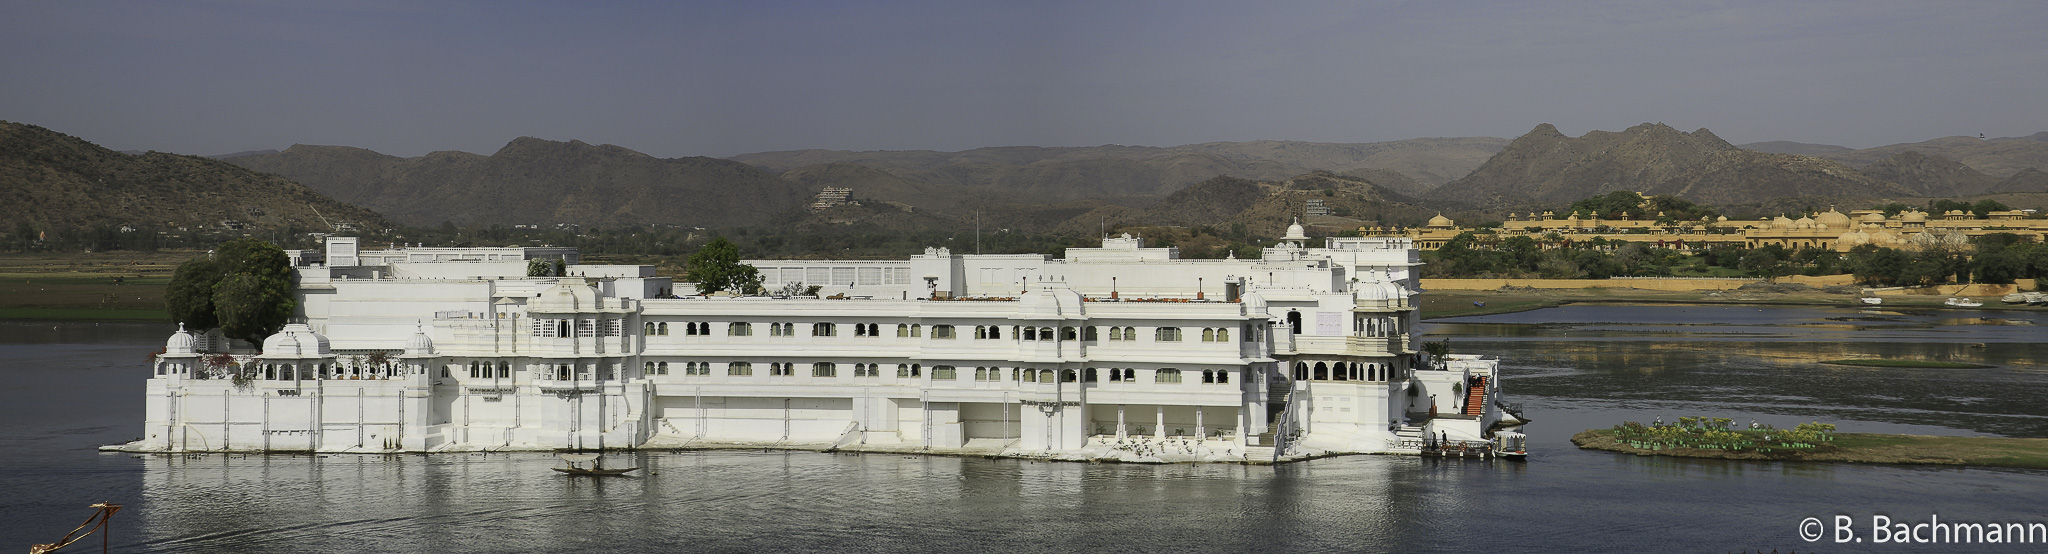 Udaipur_Panorama1.jpg